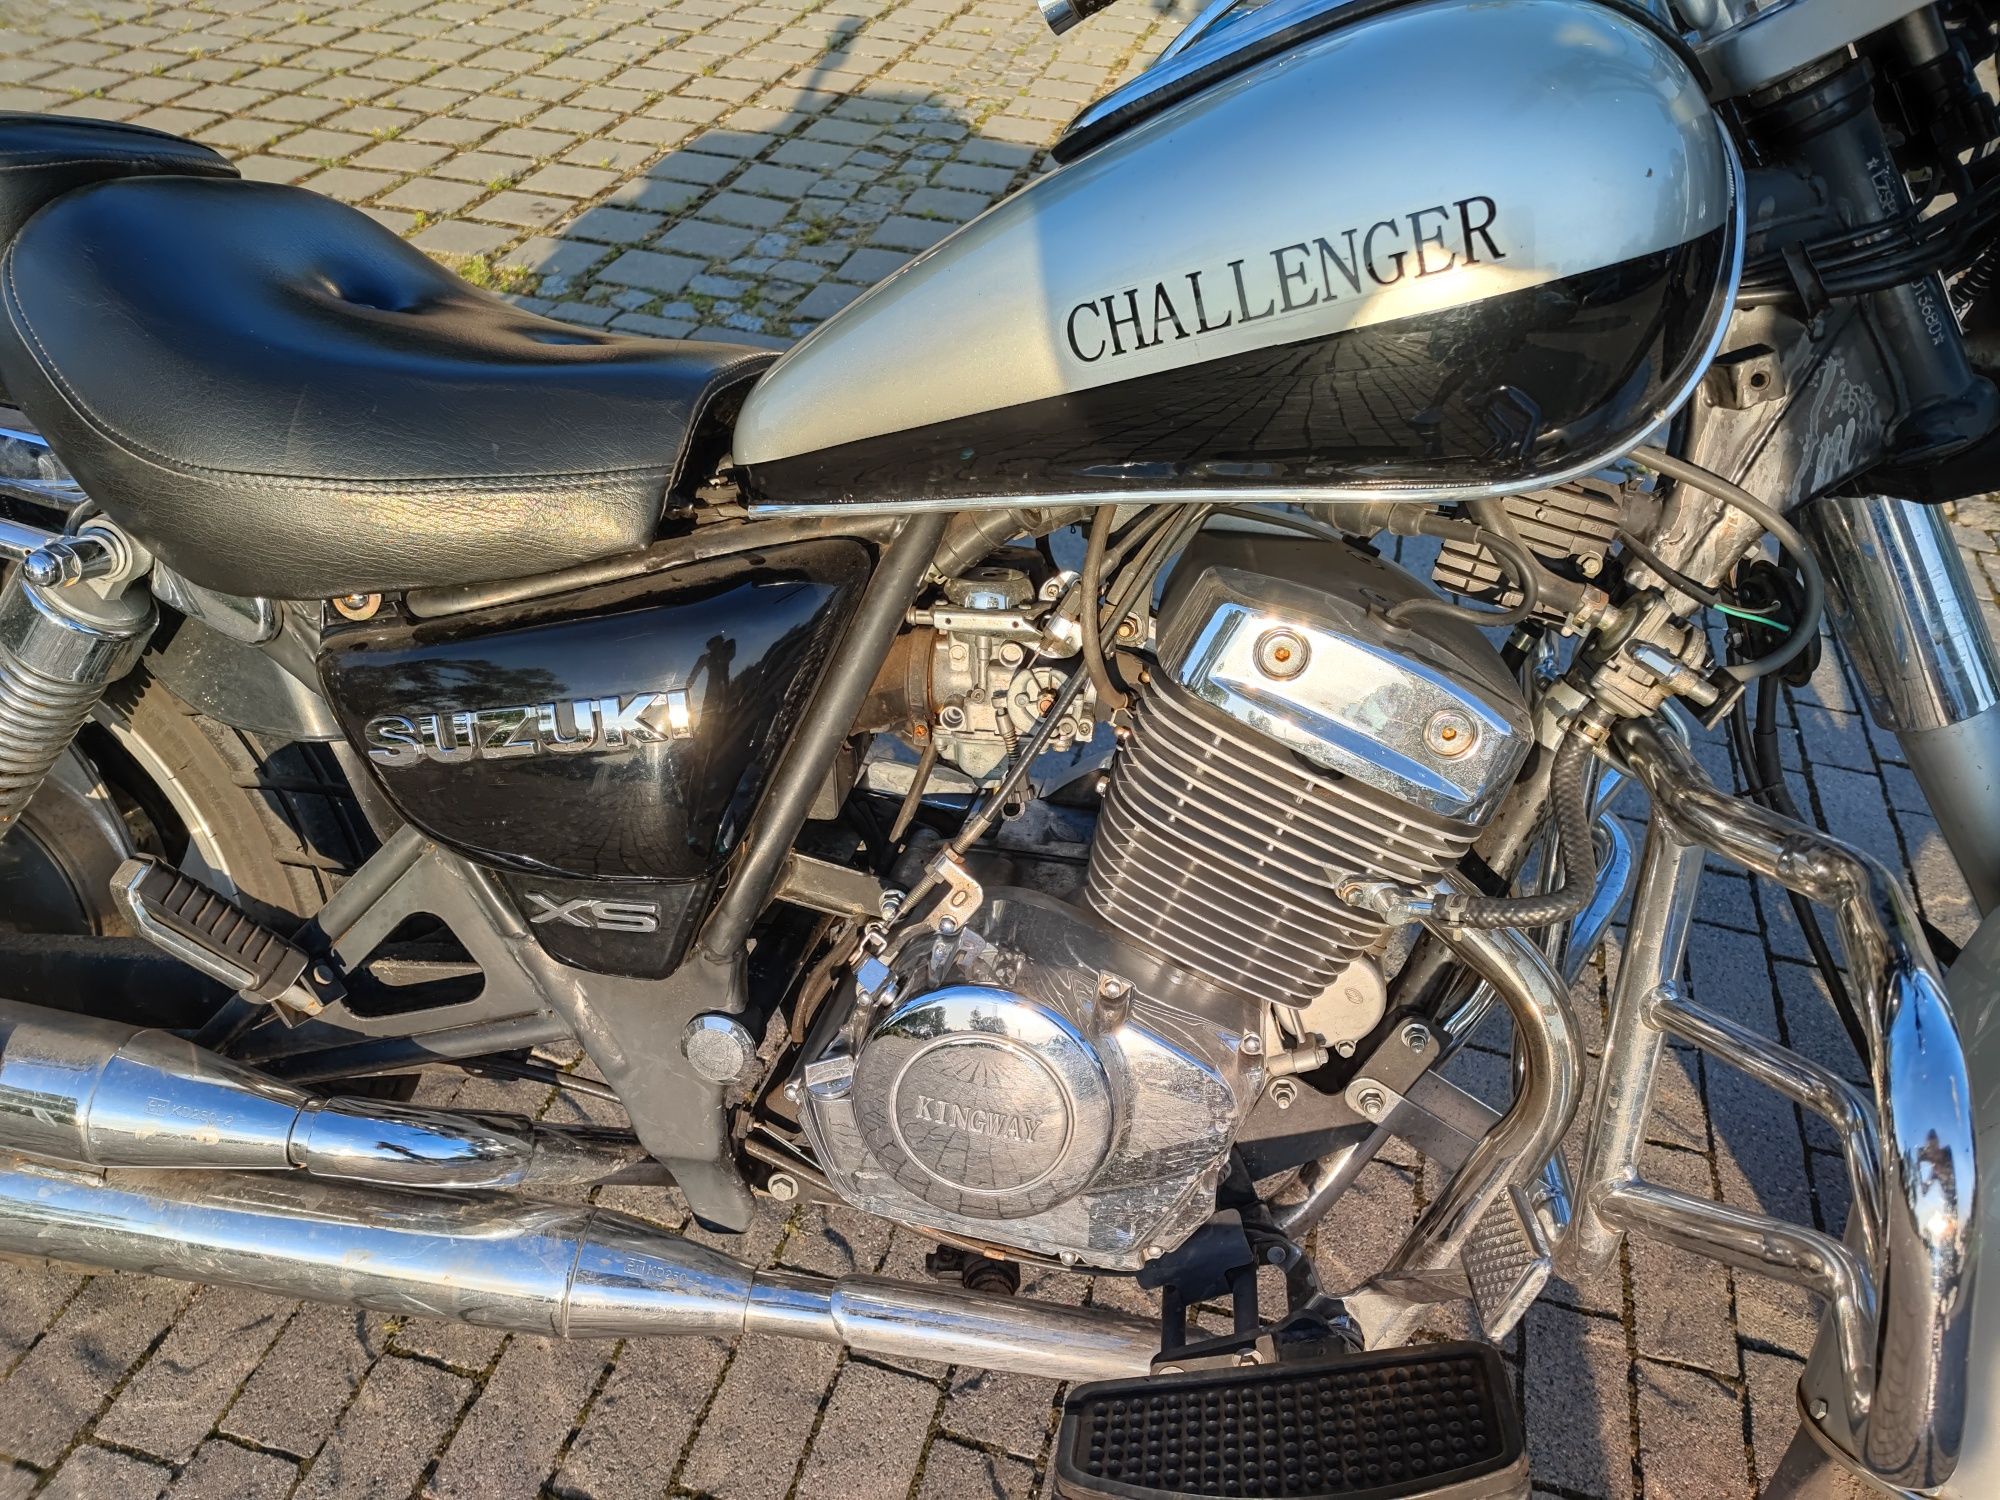 Motocykl Kingway Challenger Kangda kd250